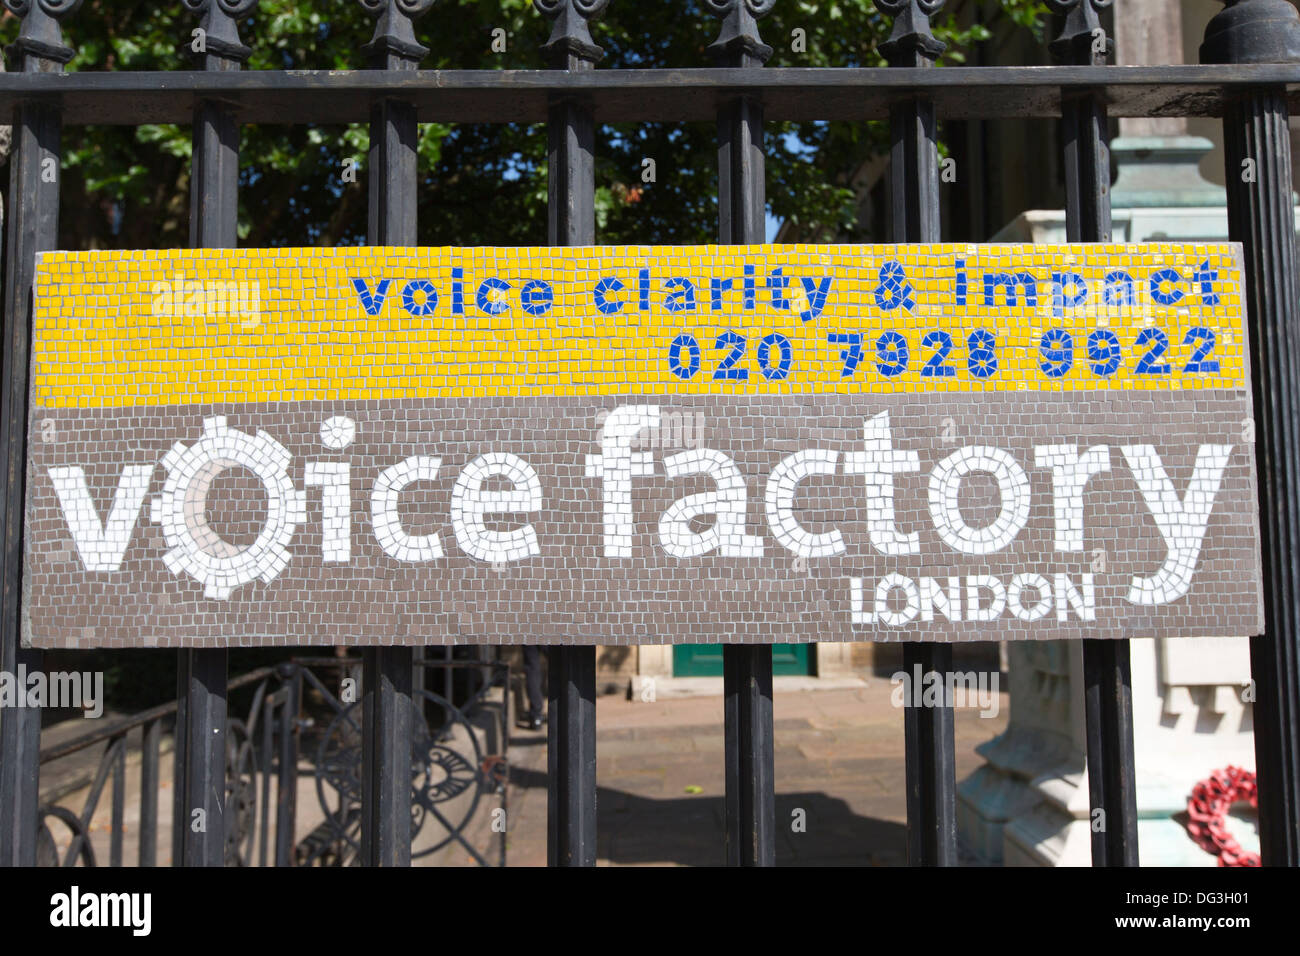 Voice Clarity & Impact mosaic sign, St John's Crypt, 73 Waterloo Road, London, UK, SE1. Stock Photo